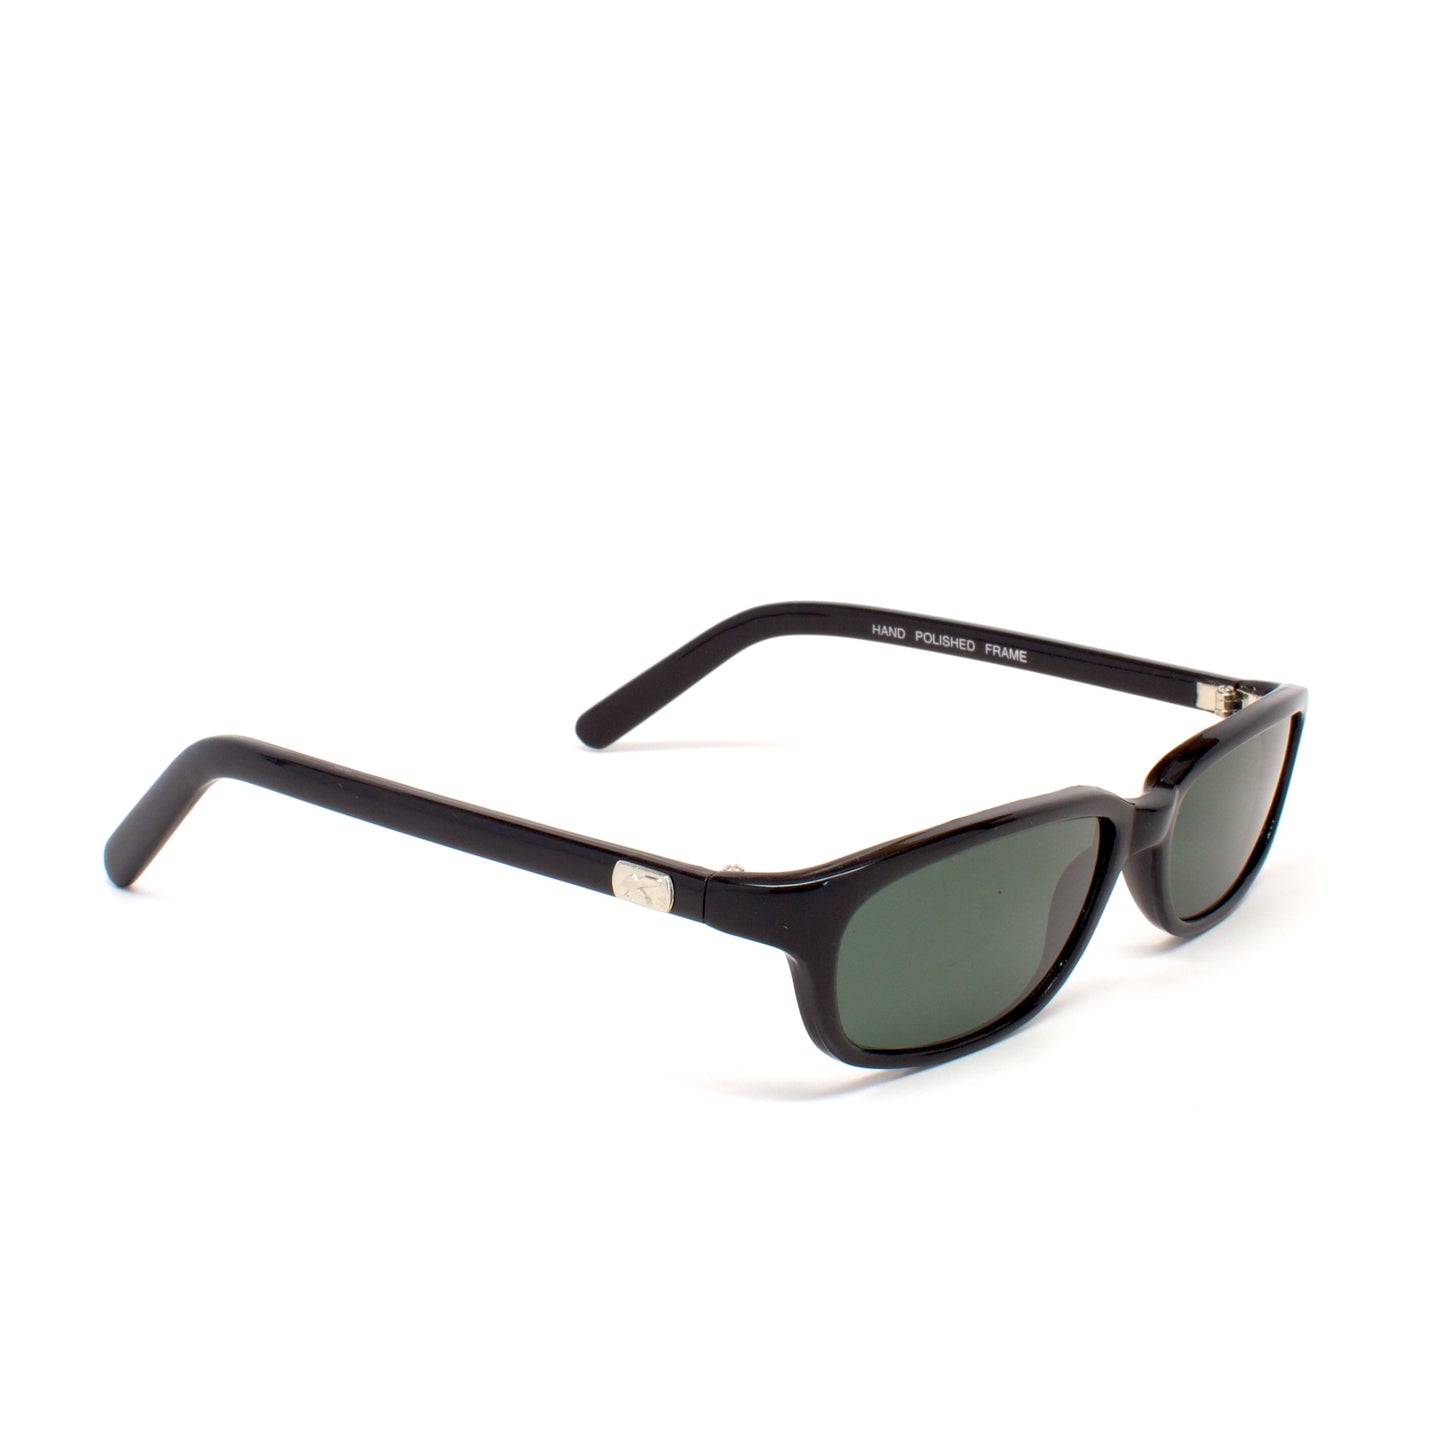 Vintage Small Size Narrow Frame Slim Rectangle Sunglasses - Black